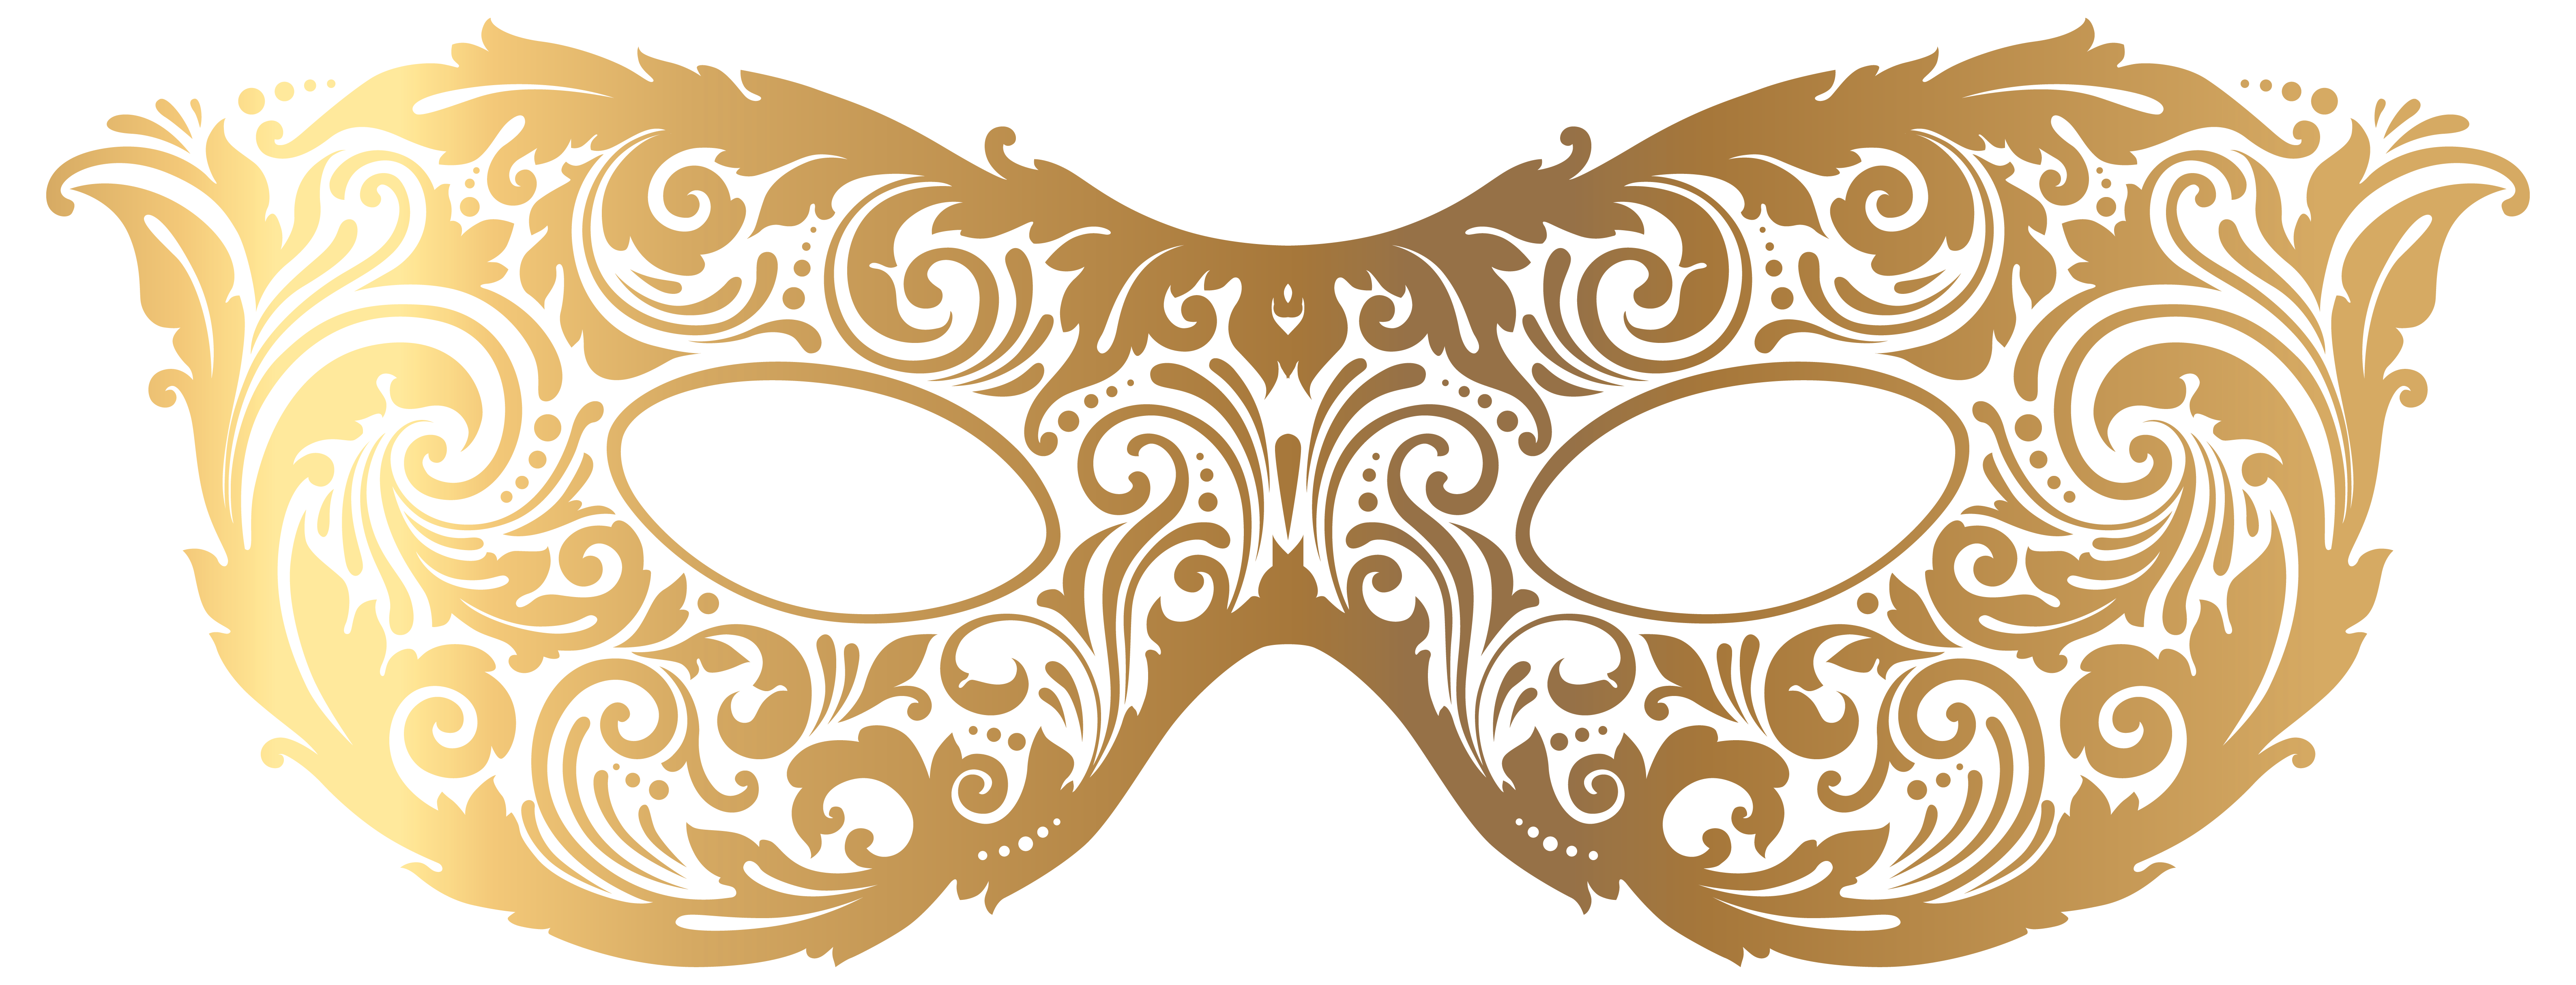 Gold carnival mask clip art image - Clipartix